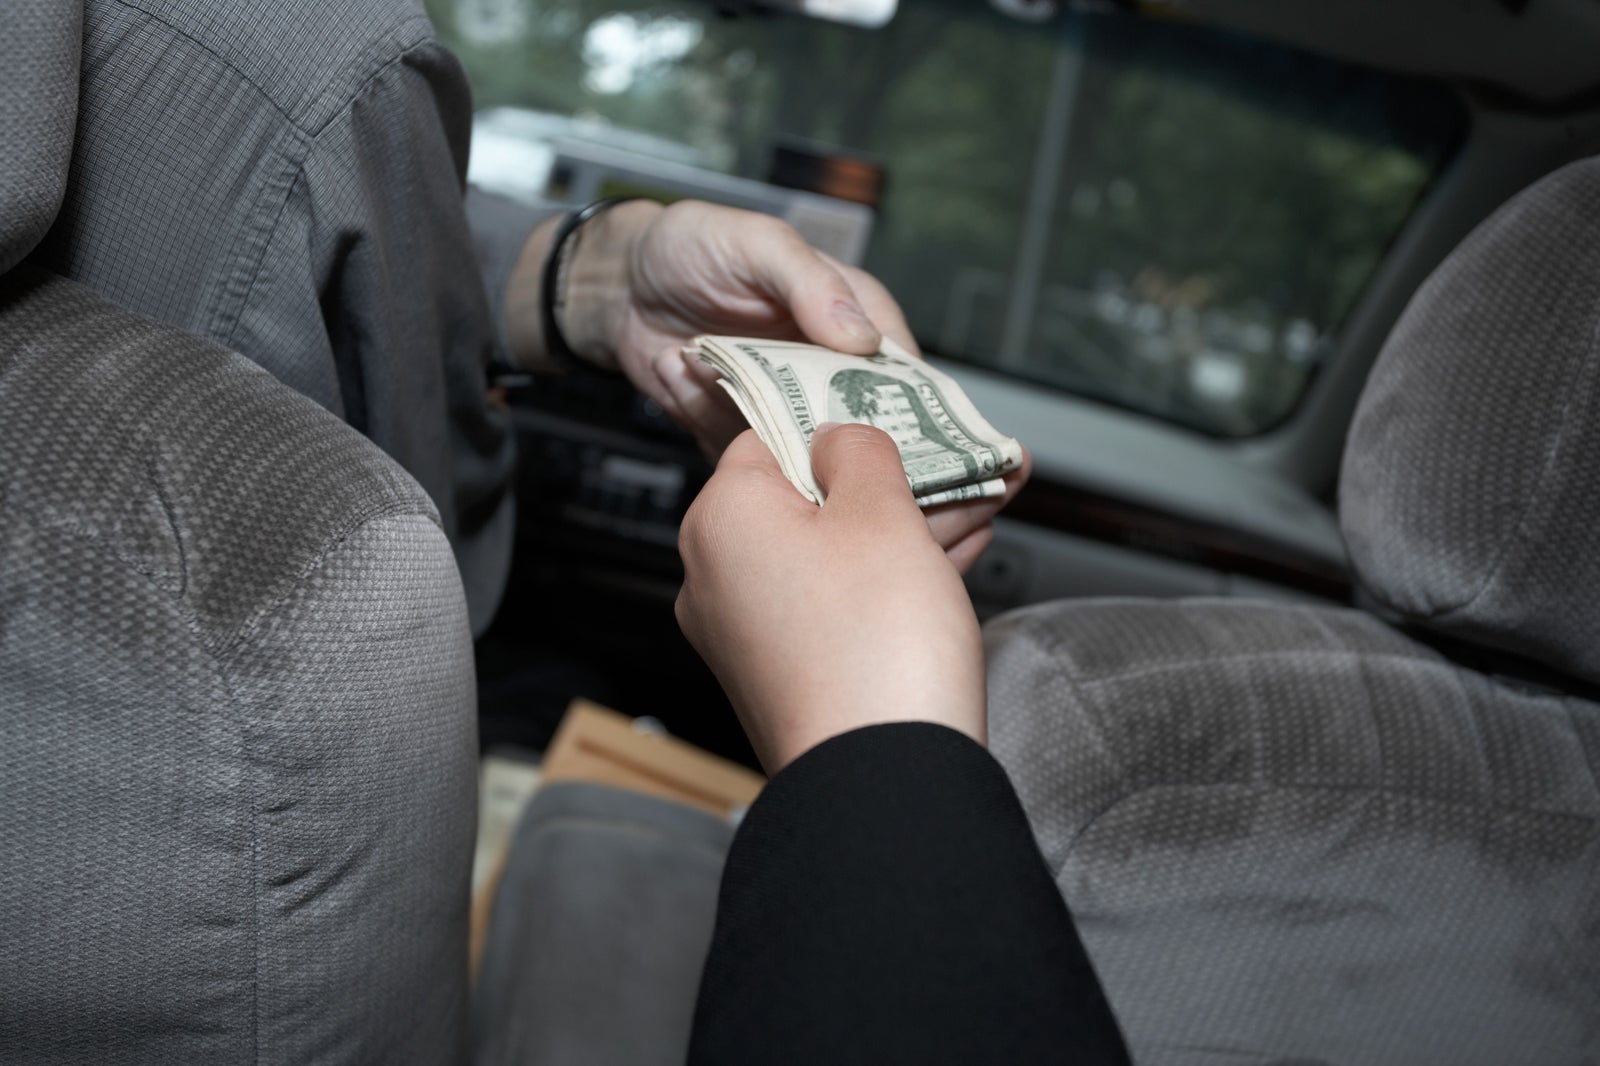 Businesswoman handing money to cab driver